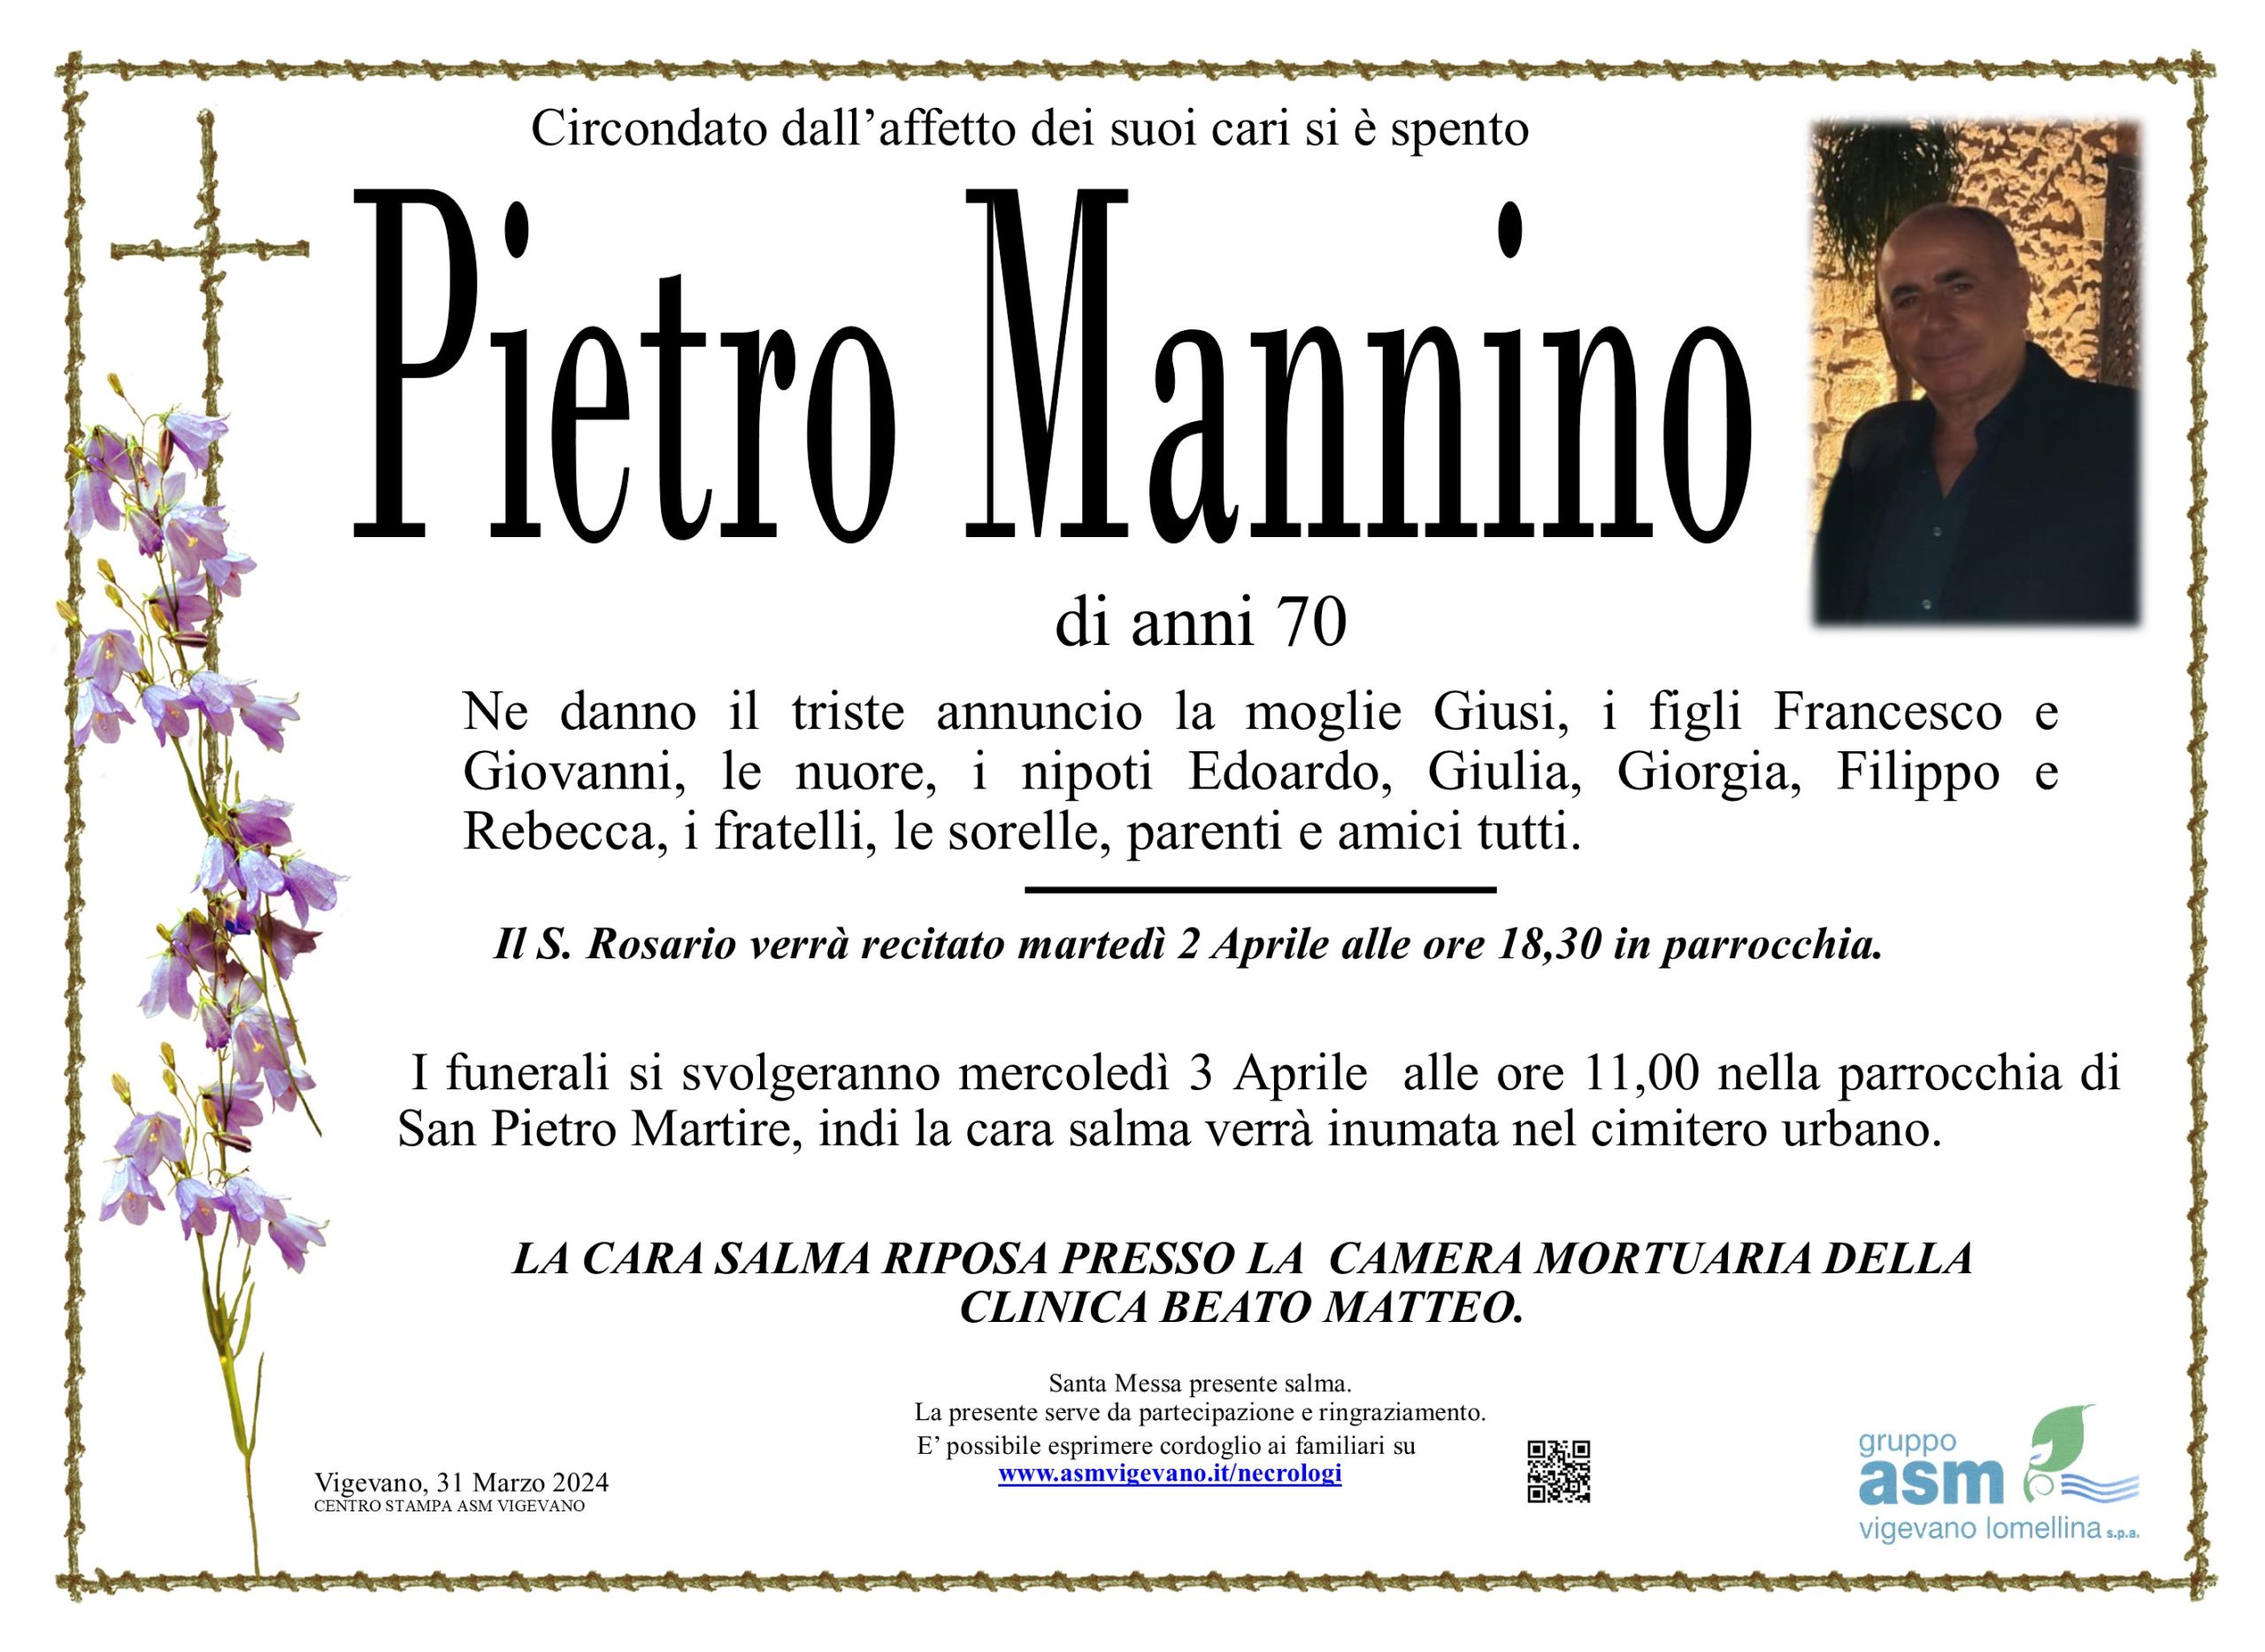 Pietro Mannino